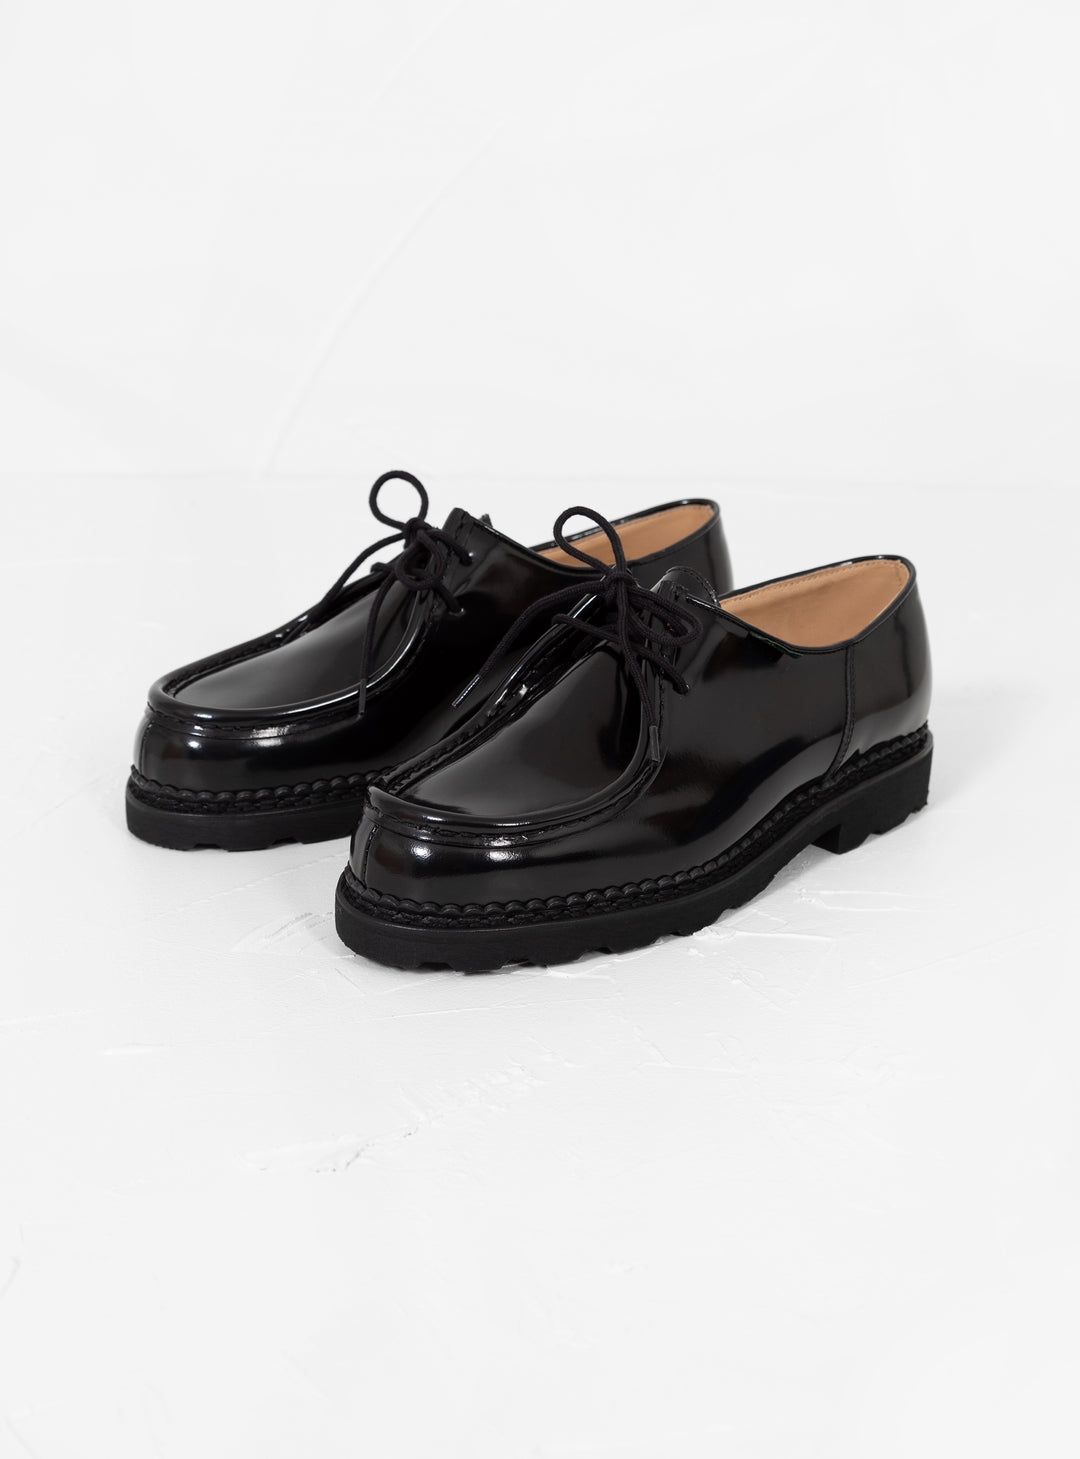 Paraboot Paraboot Michael Gloss Shoes Black - Size: UK4